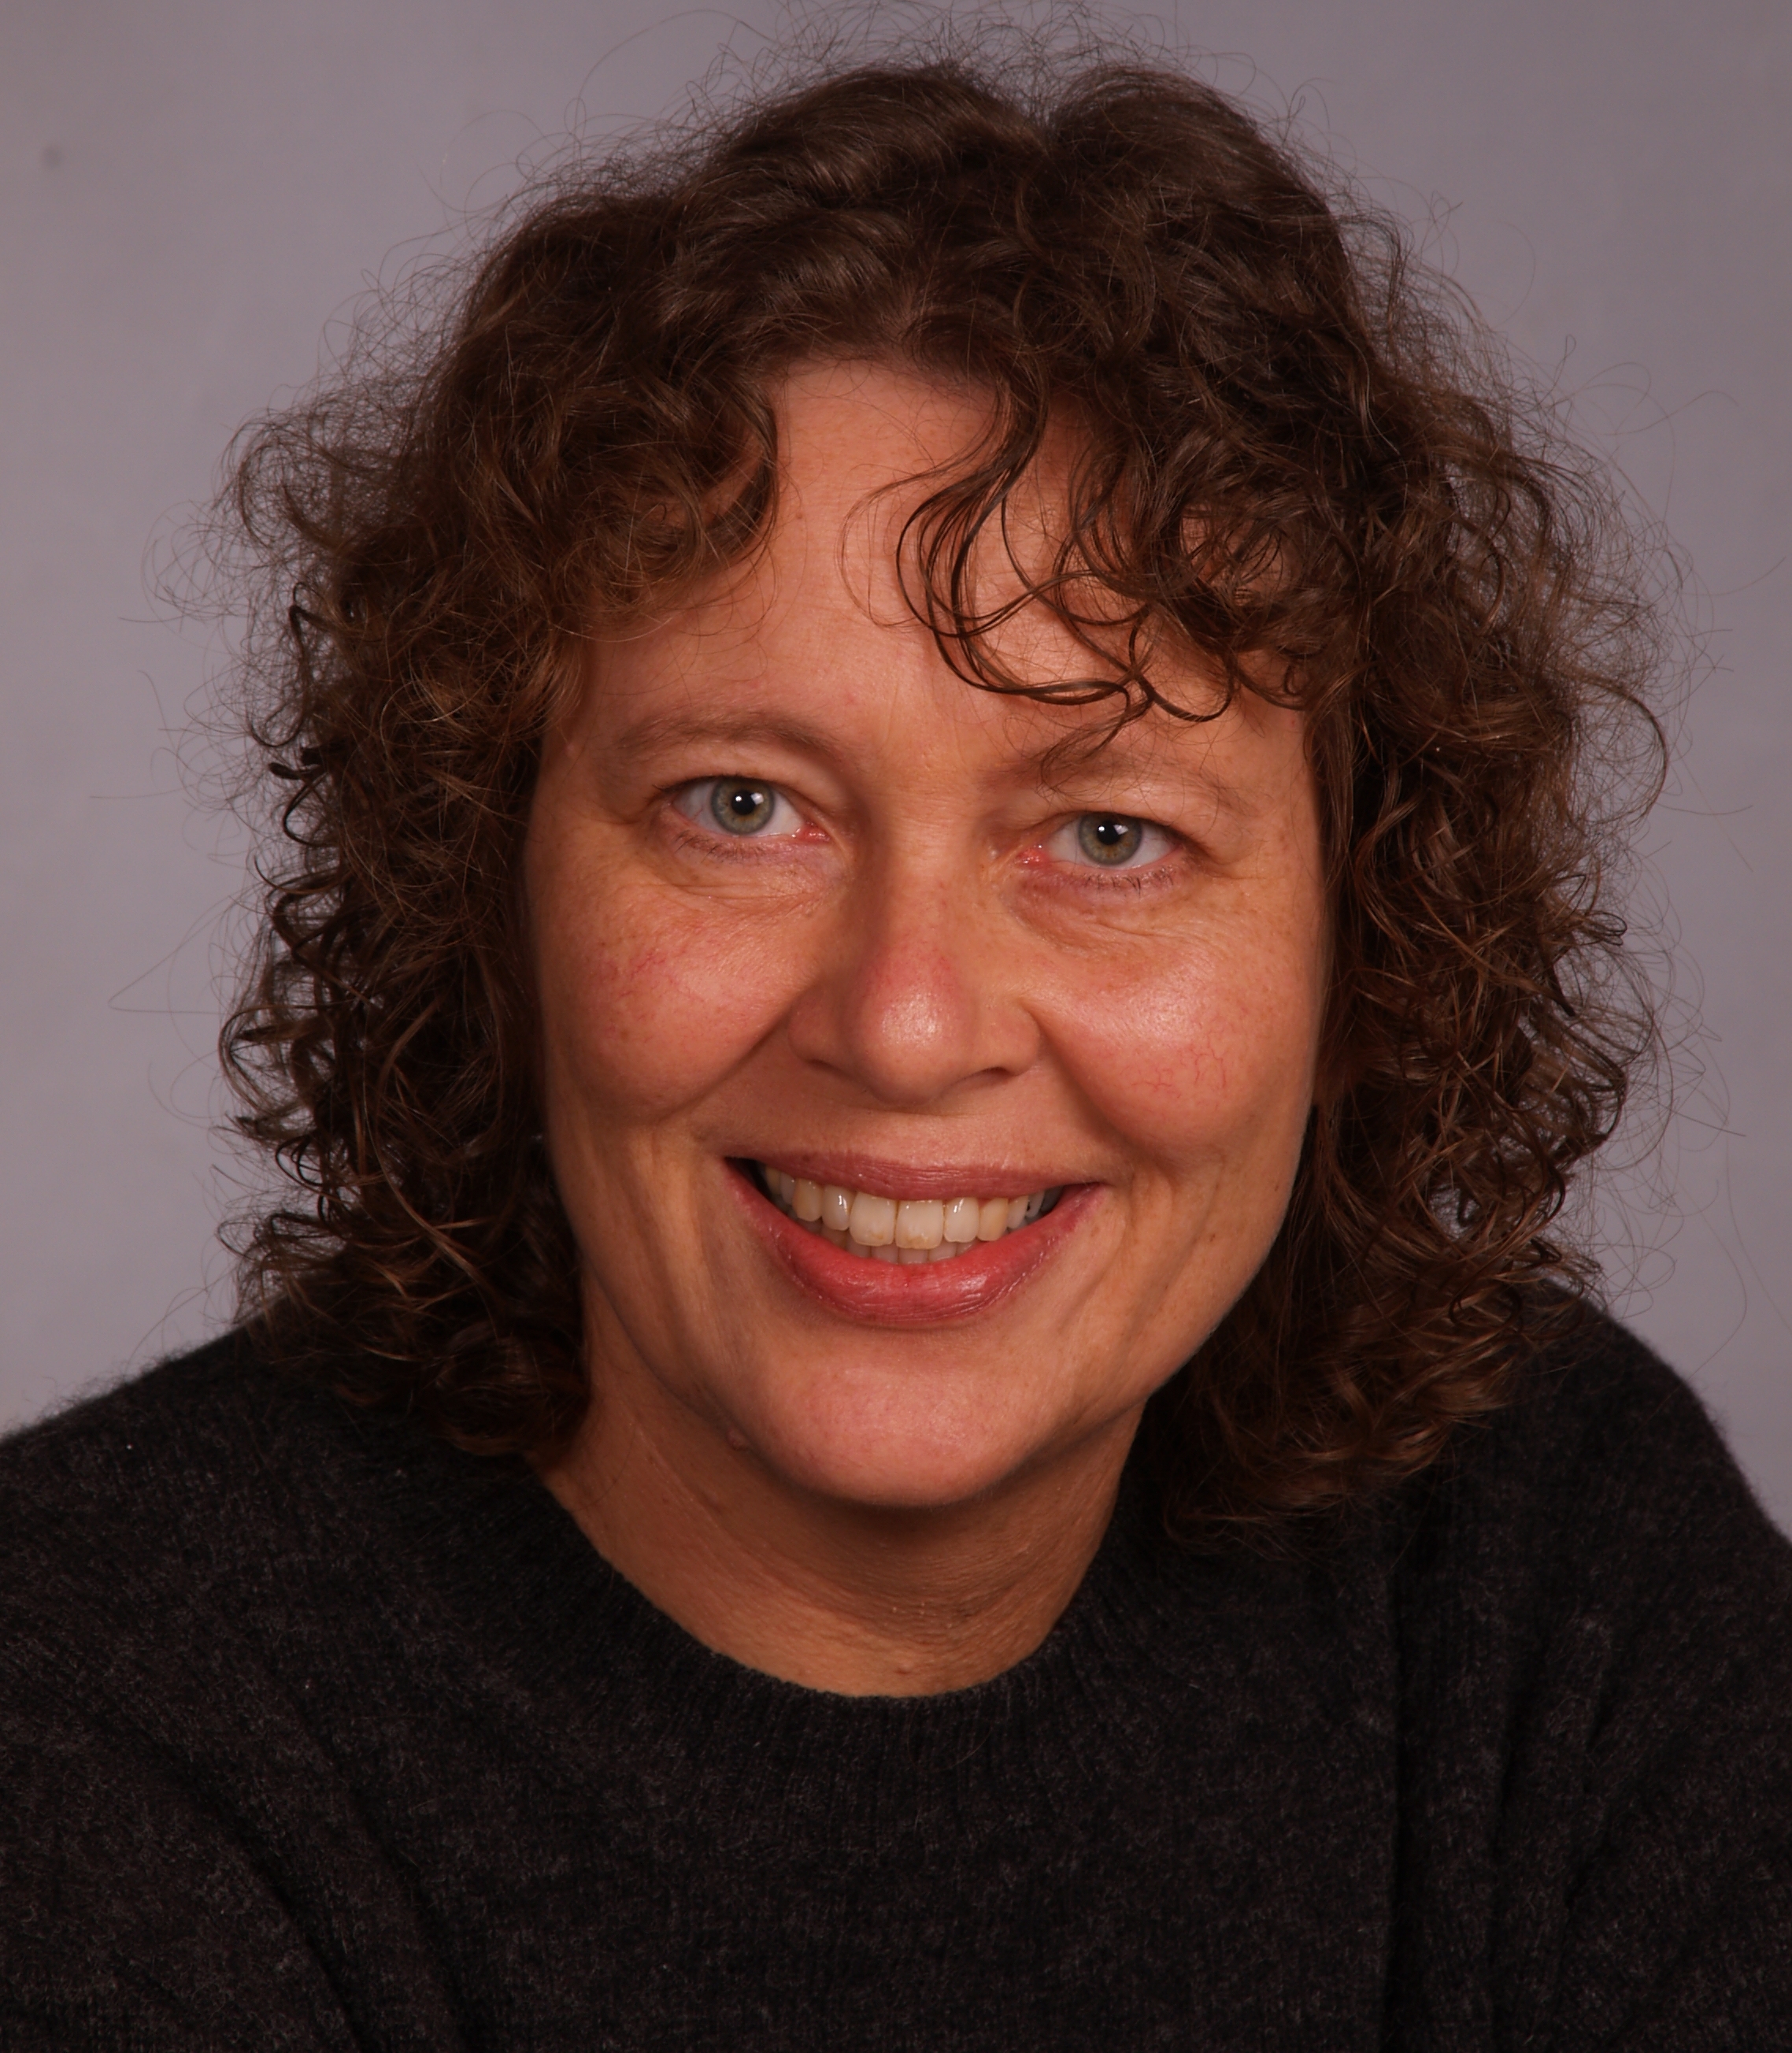 Anita Lillevang